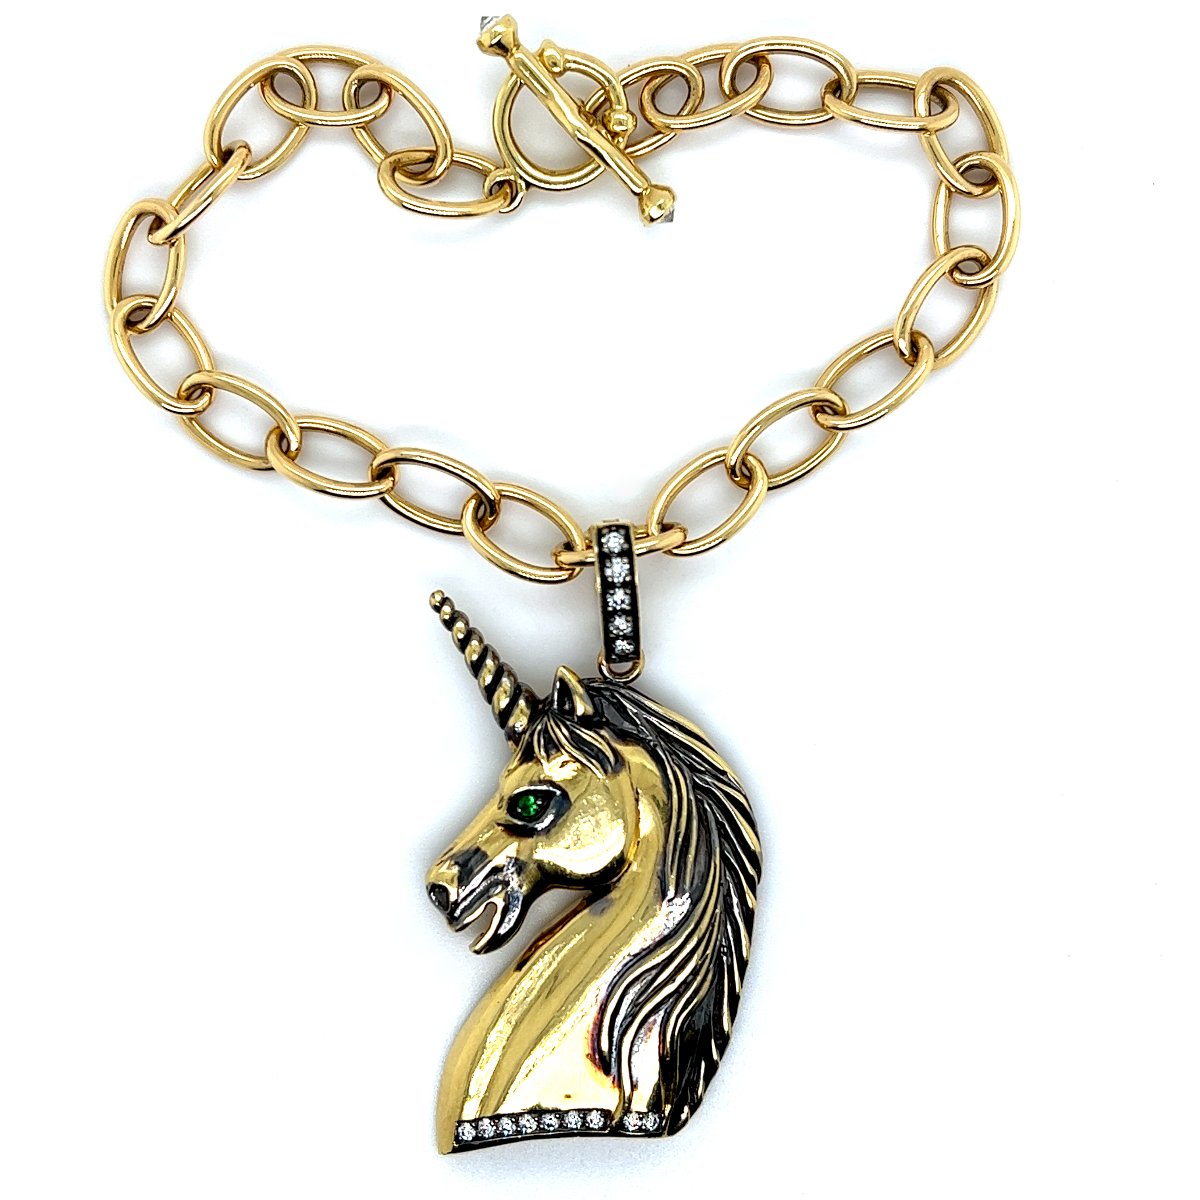 18kt Green Gold Unicorn Head Charm